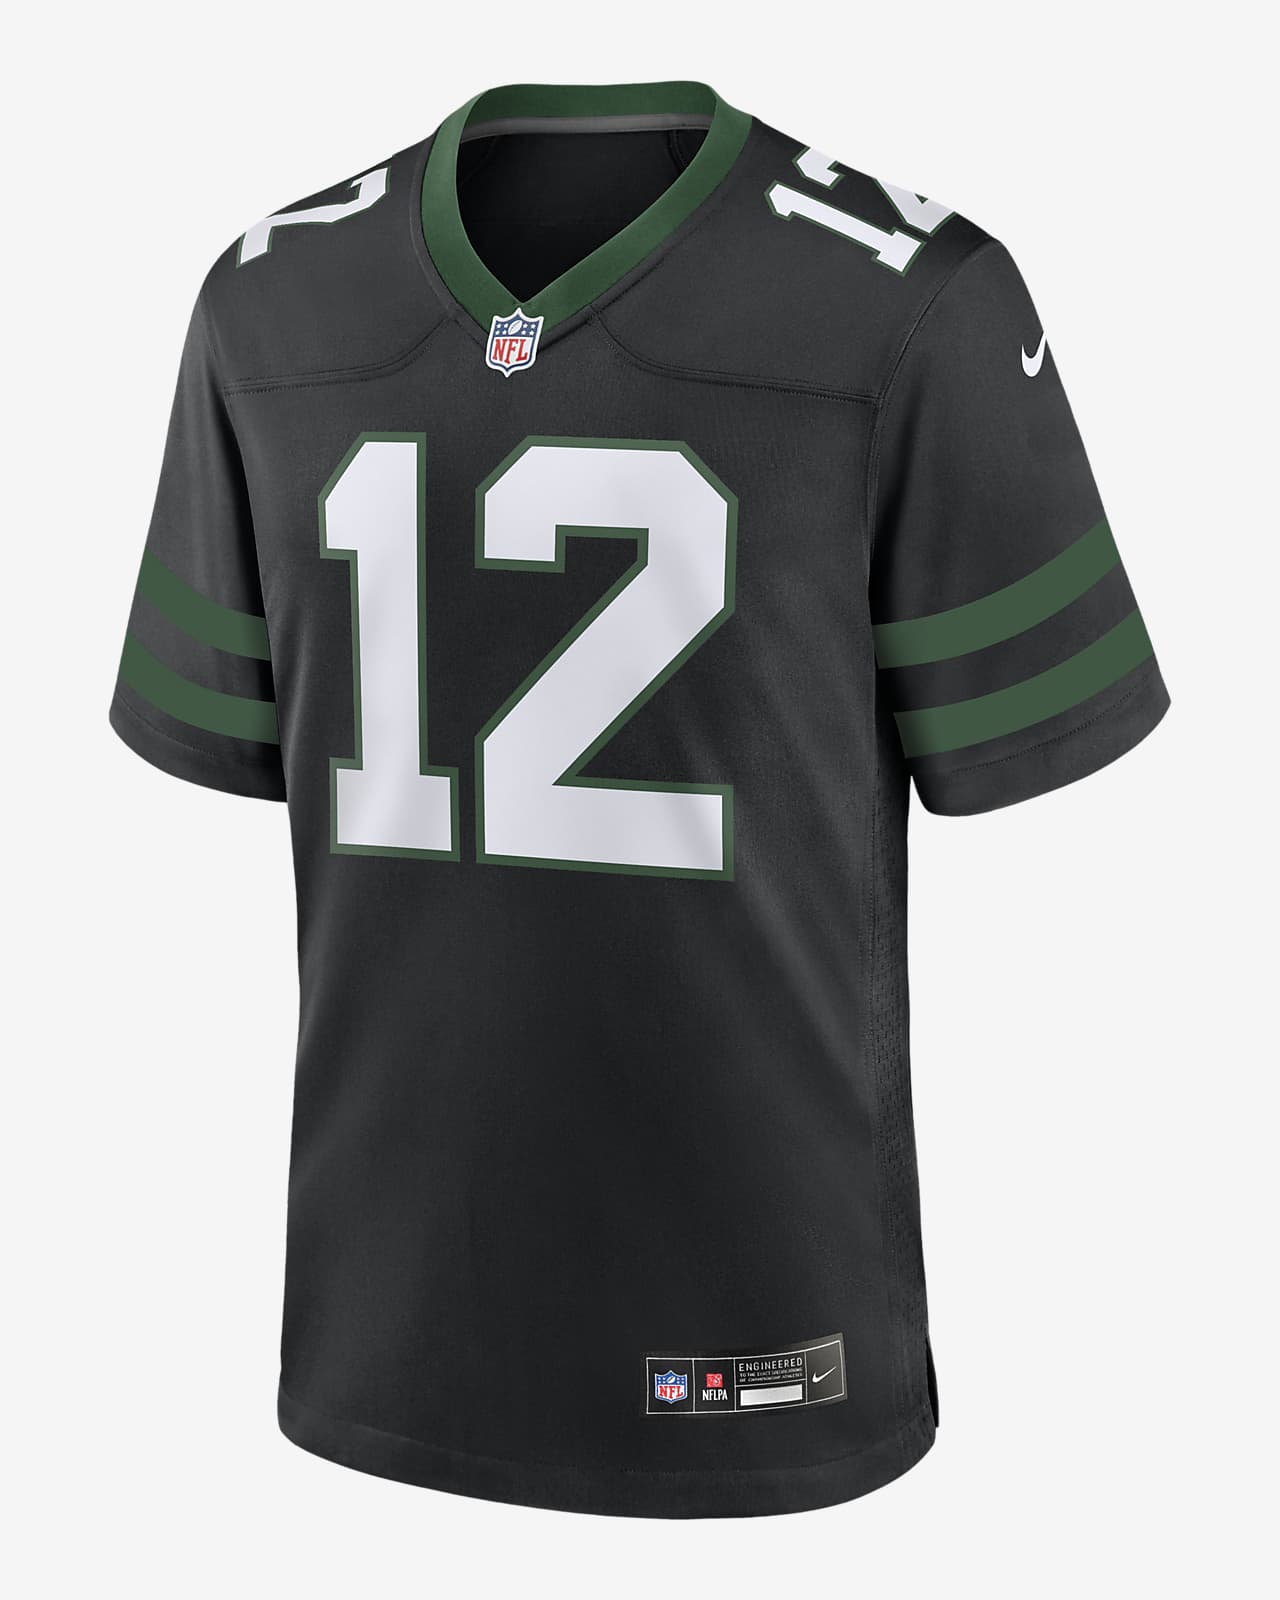 Jersey de fútbol americano Nike de la NFL Game para hombre Joe Namath New York Jets